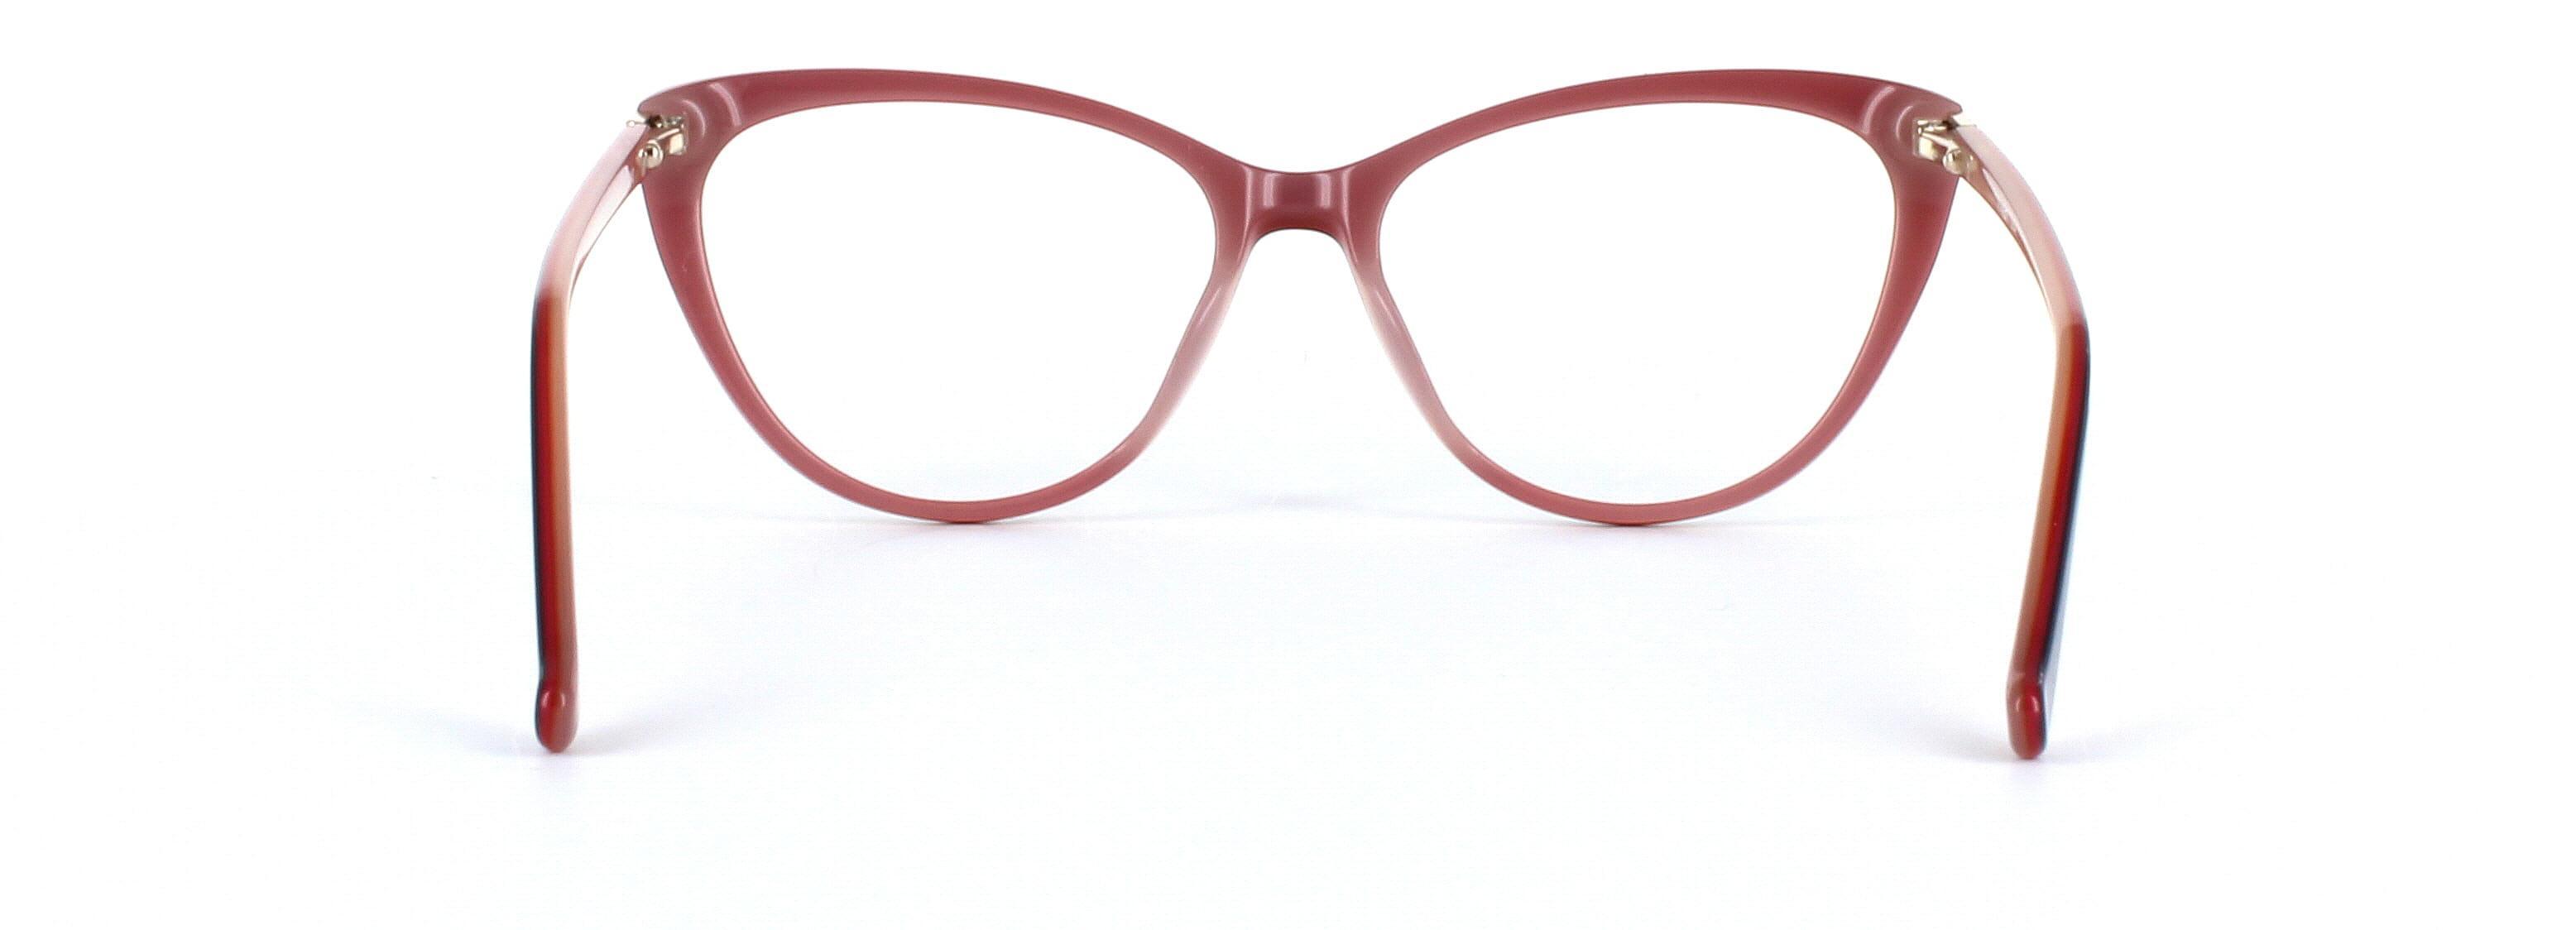 Lydia Blue Full Rim Cat Eye Acetate Glasses - Image View 3